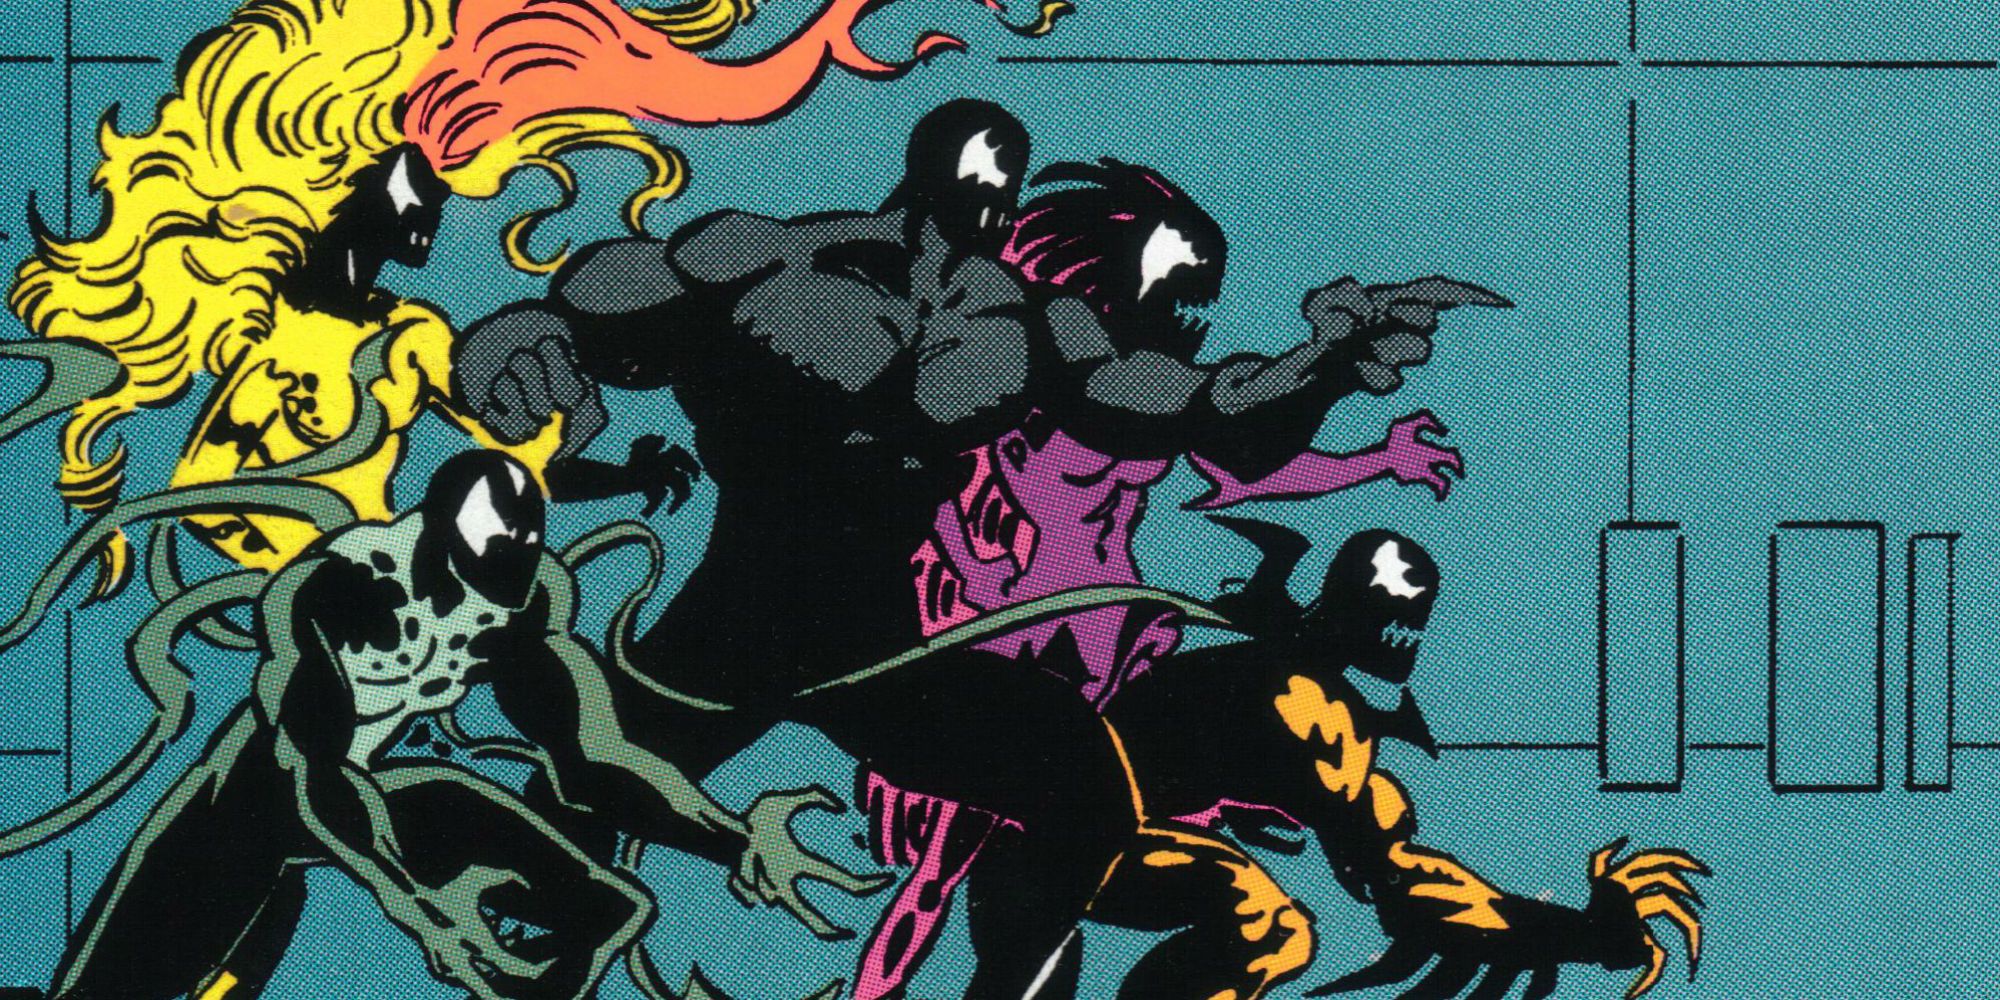 The Life Foundation Symbiotes (Scream, Lasher, Riot, Agony, Phage) in Marvel Comics